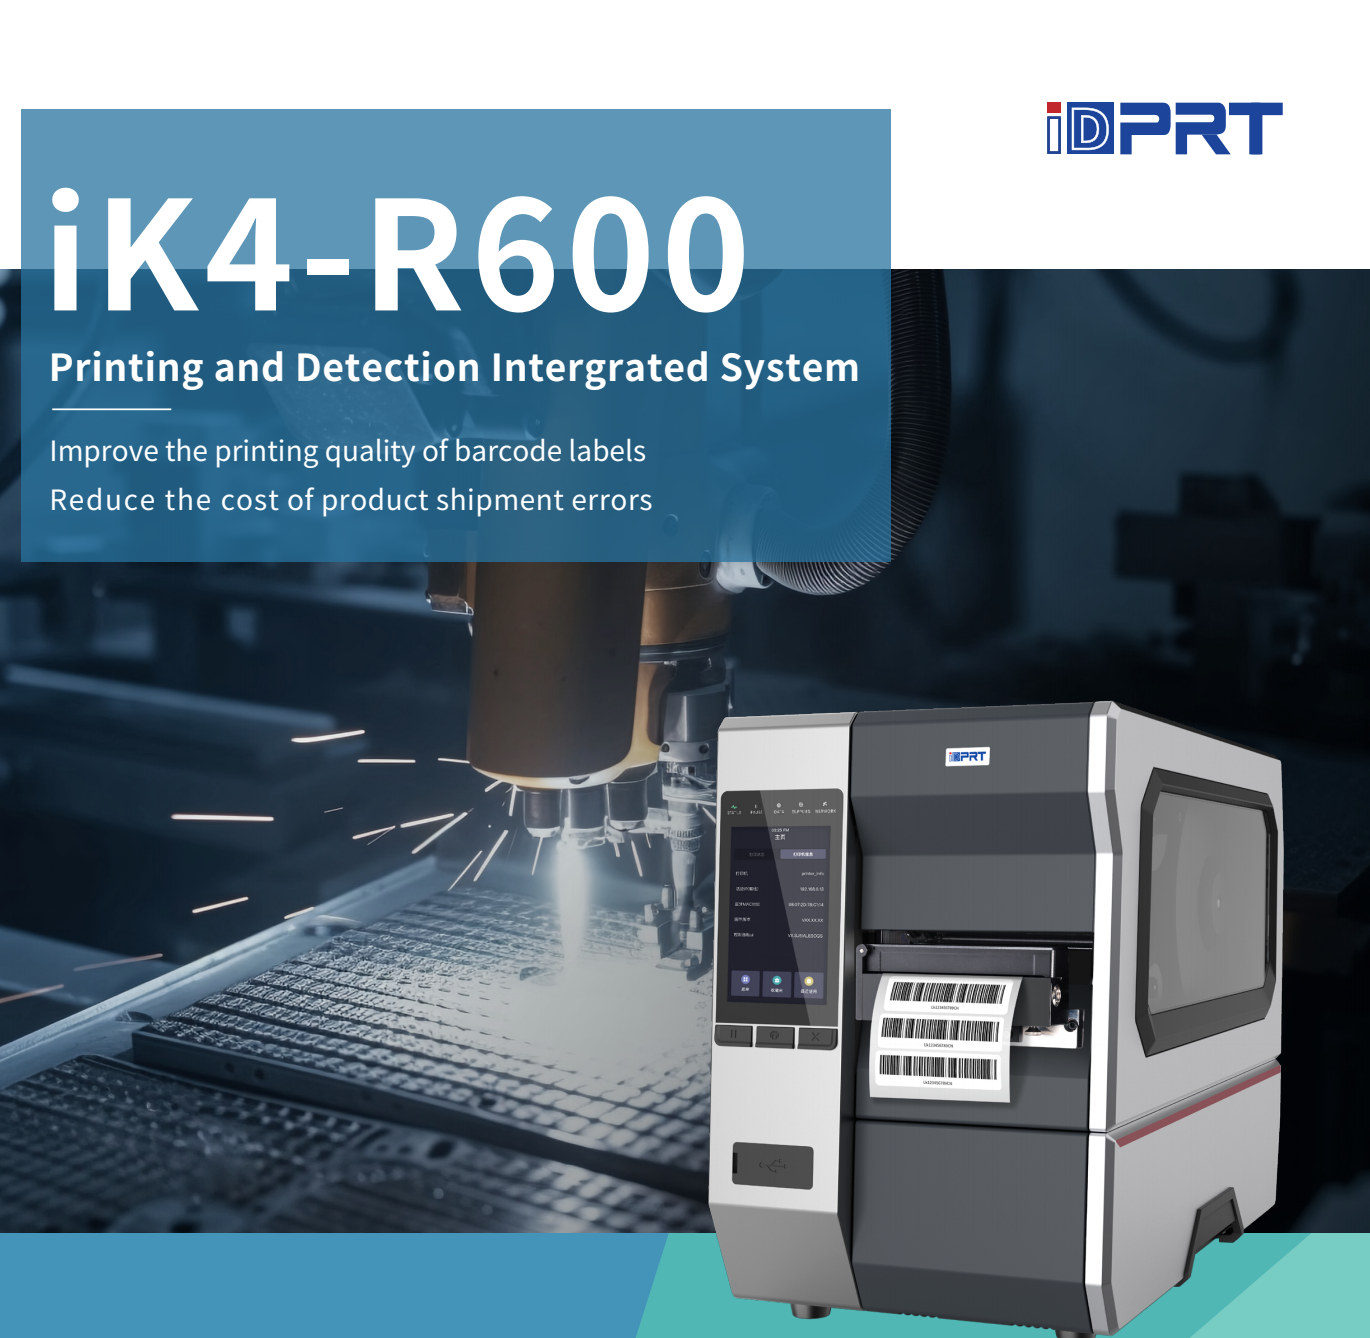 iDPRT iK4 R600 Barcode Printers met Verifiers.png